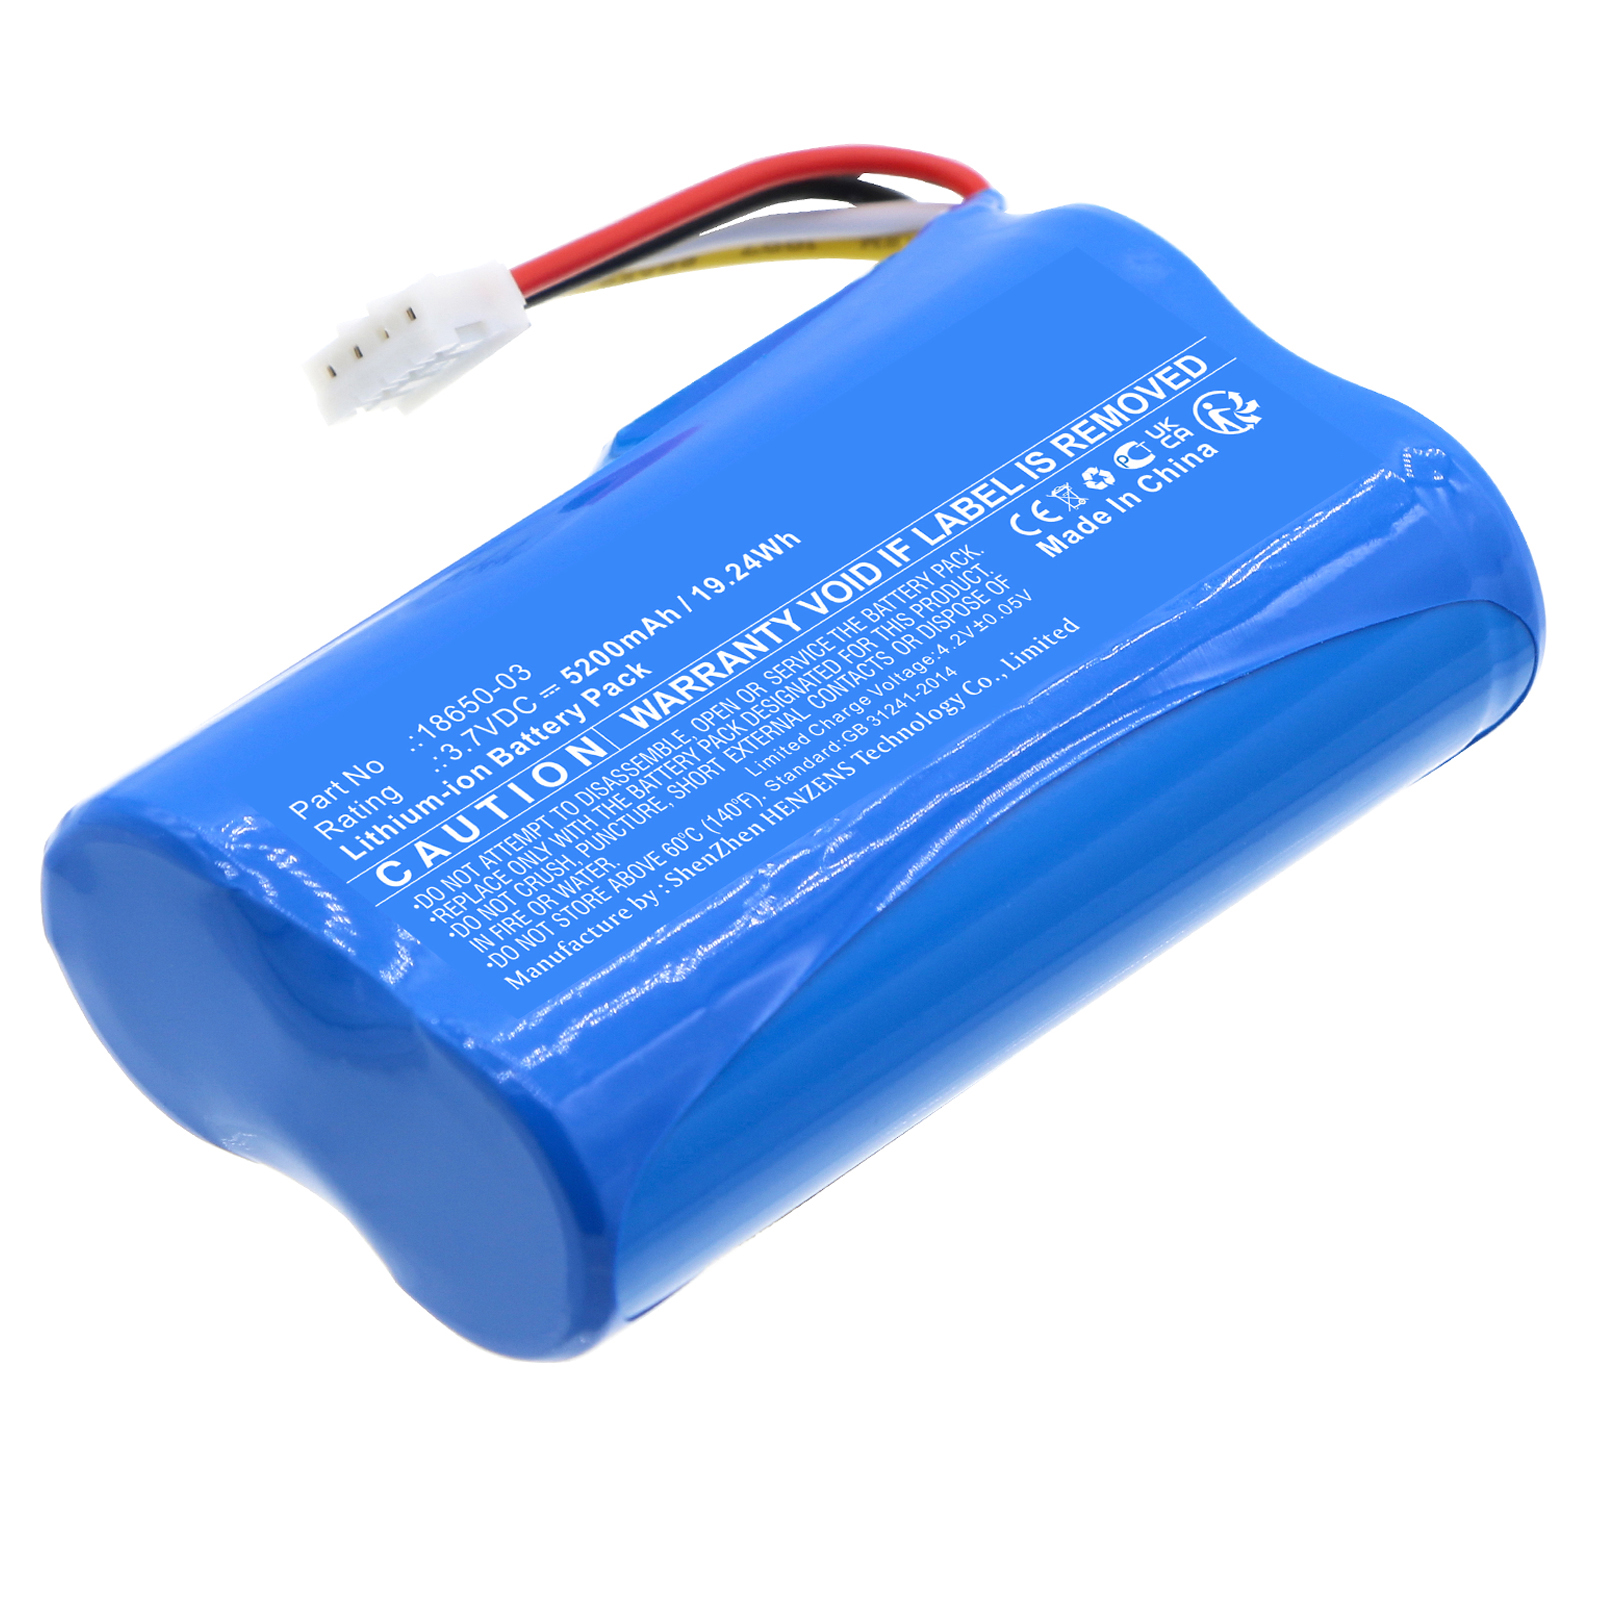 Synergy Digital Home Security Camera Battery, Compatible with Ezviz 18650-03 Home Security Camera Battery (Li-ion, 3.7V, 5200mAh)